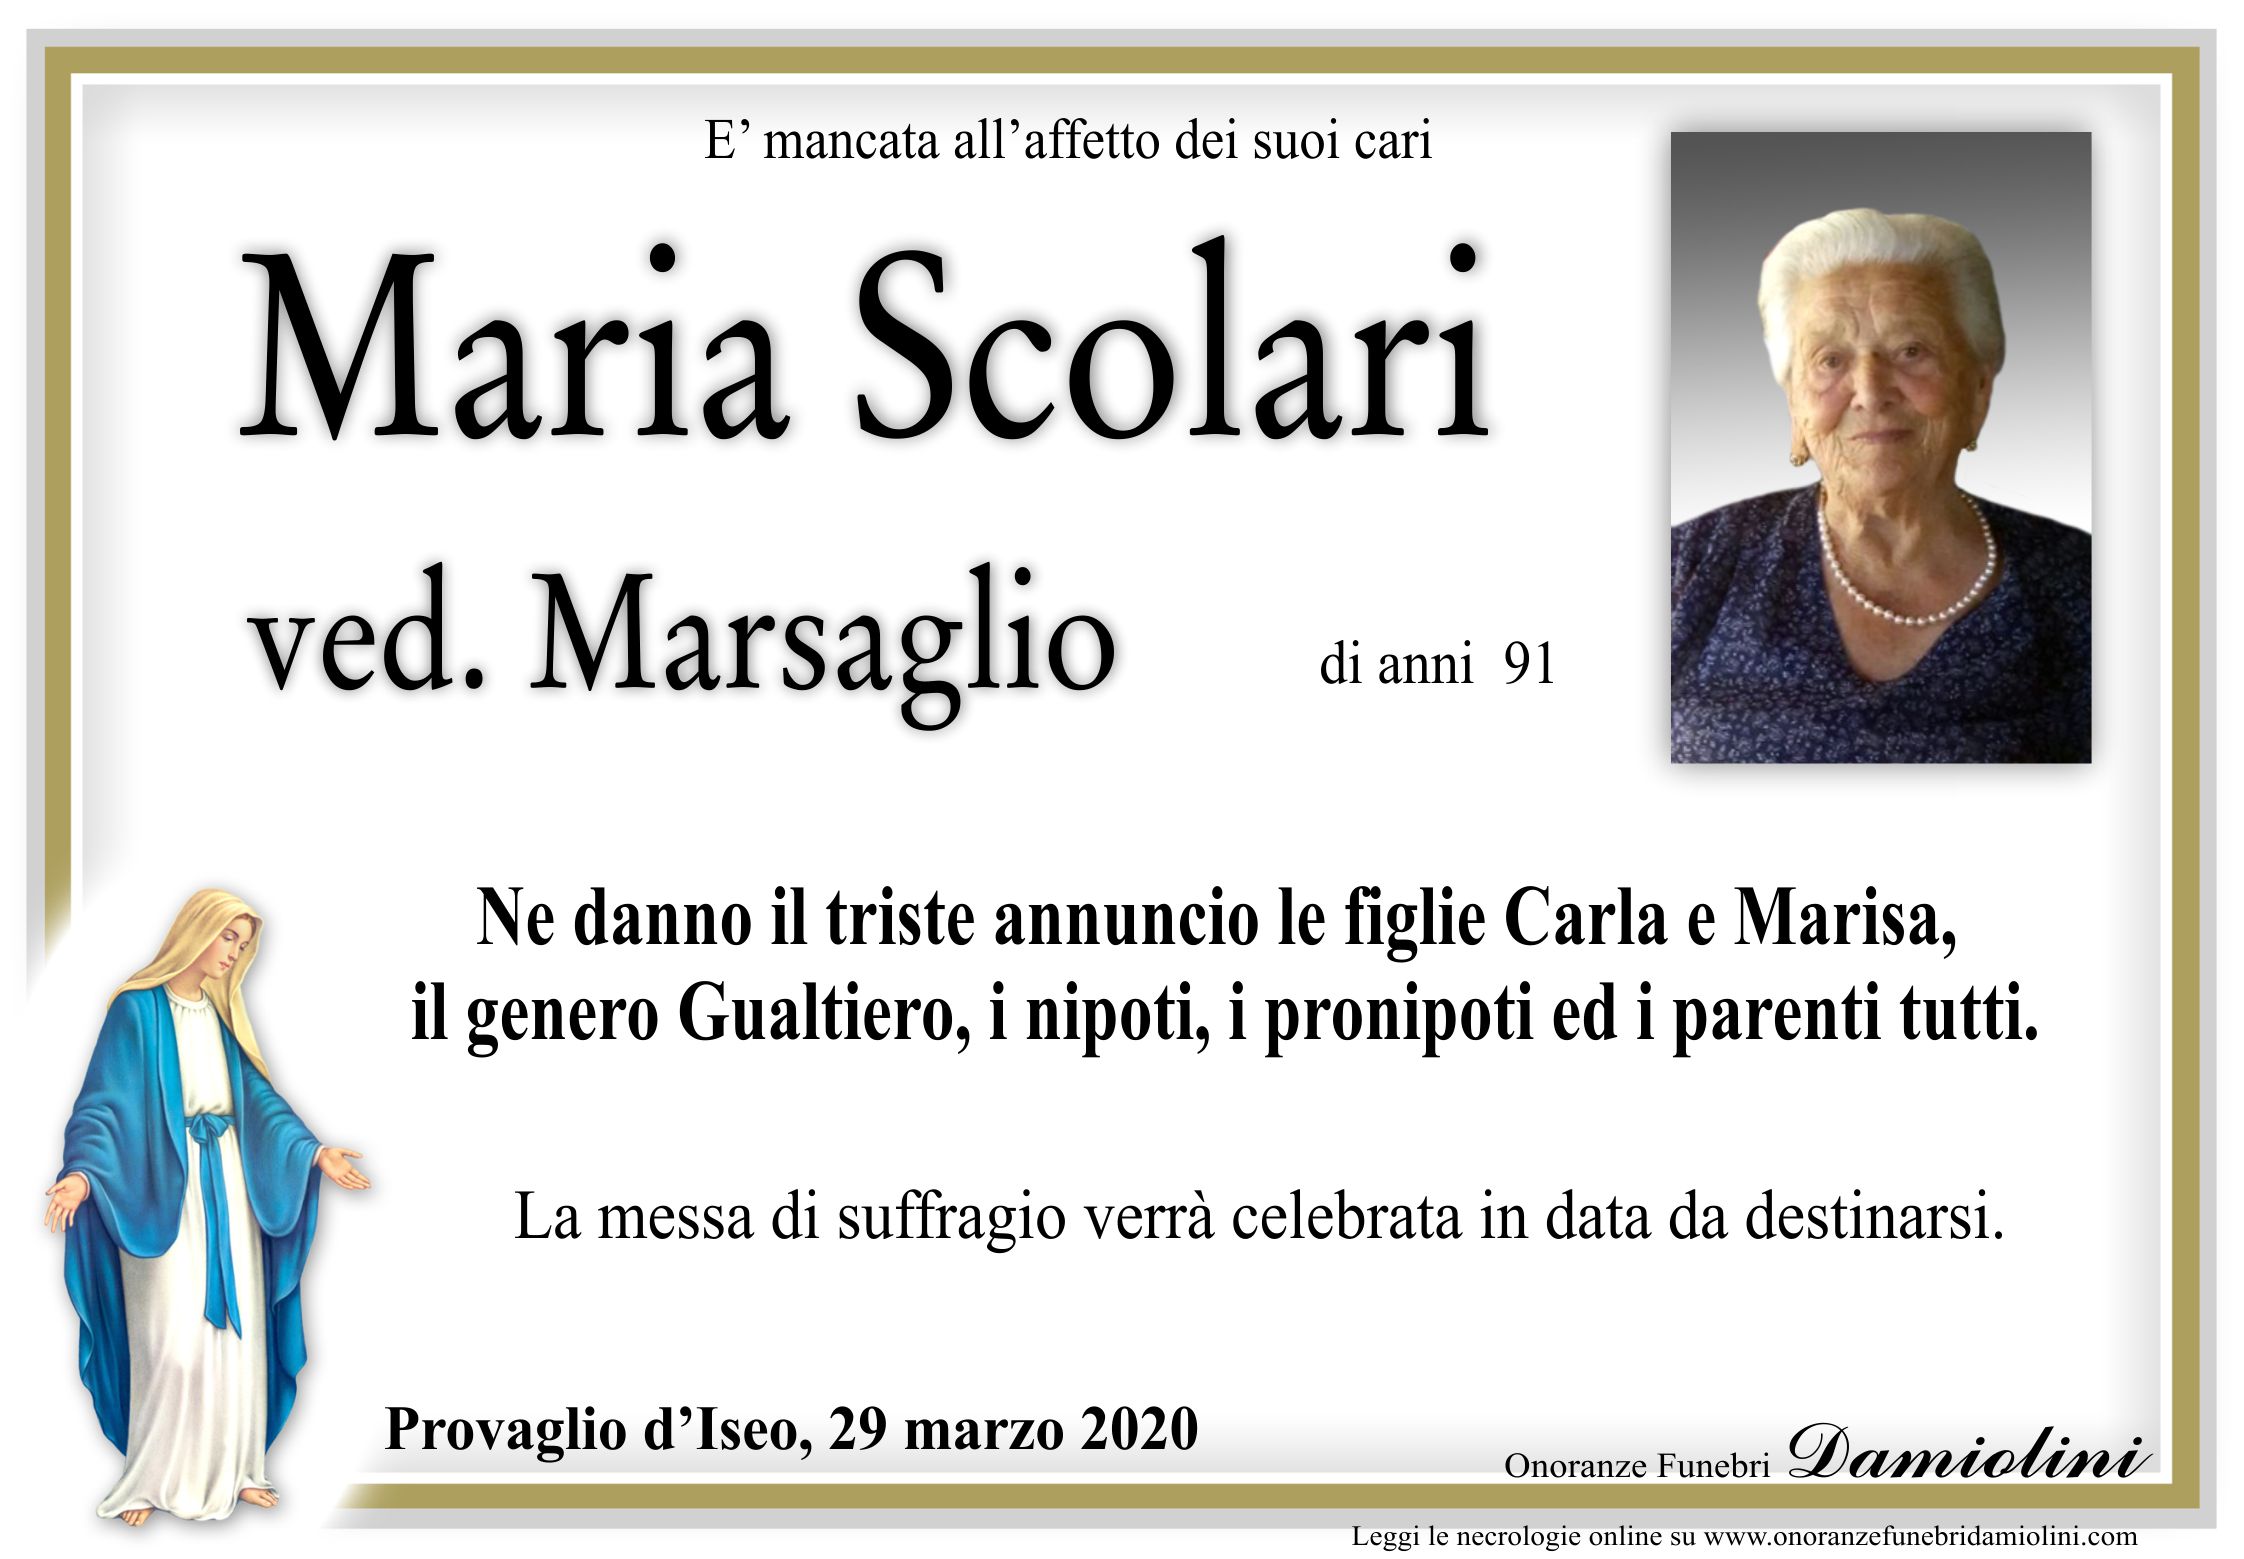 Onoranze Funebri Damiolini Sig.ra Maria Scolari